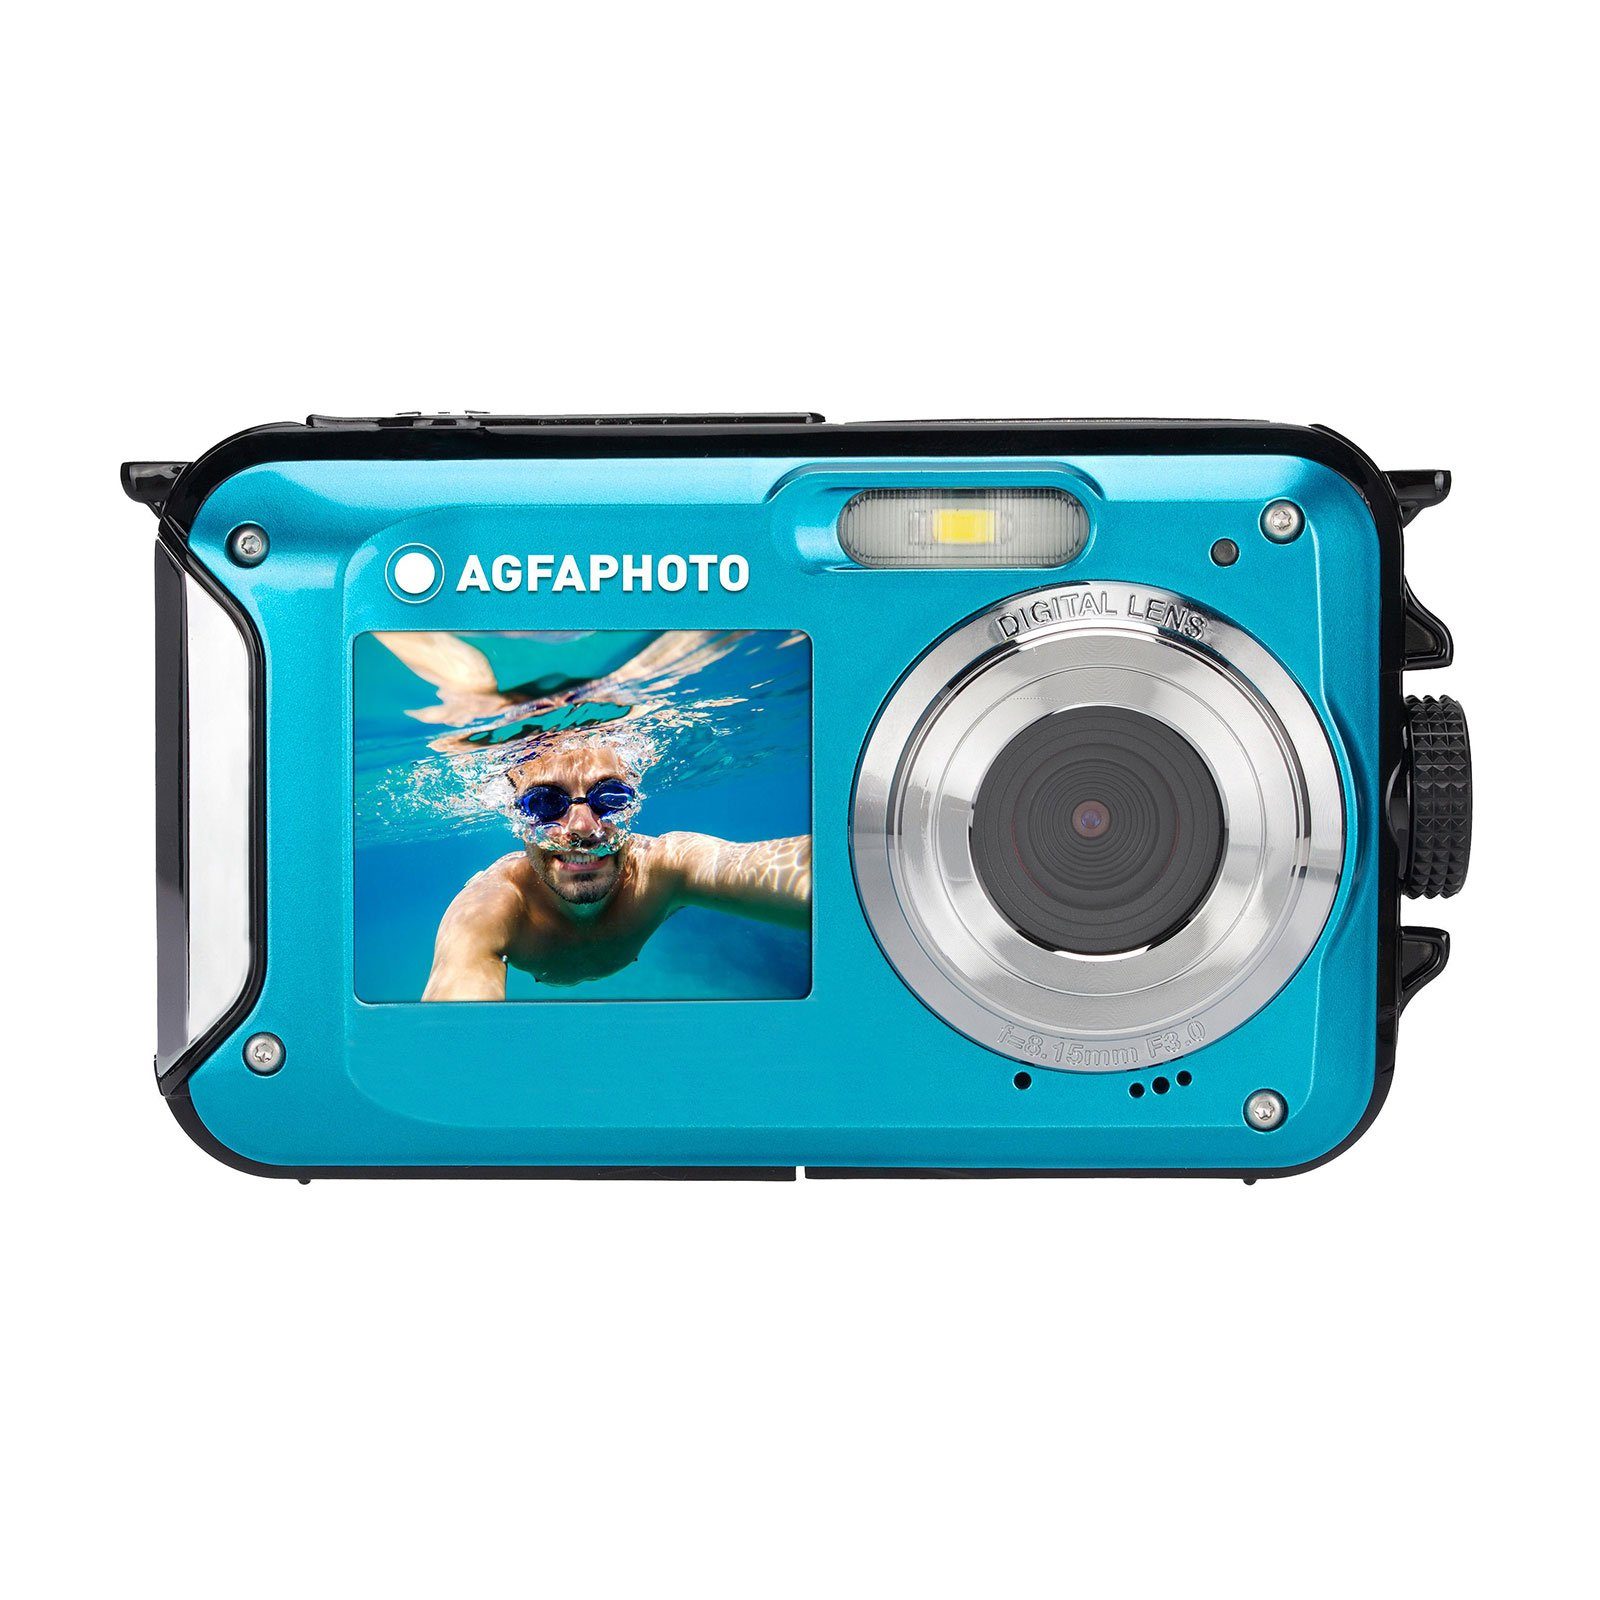 Realishot Kompaktkamera AGFA wasserdicht) Lautsprecher, Meter WP8000 (Eingebauter 3